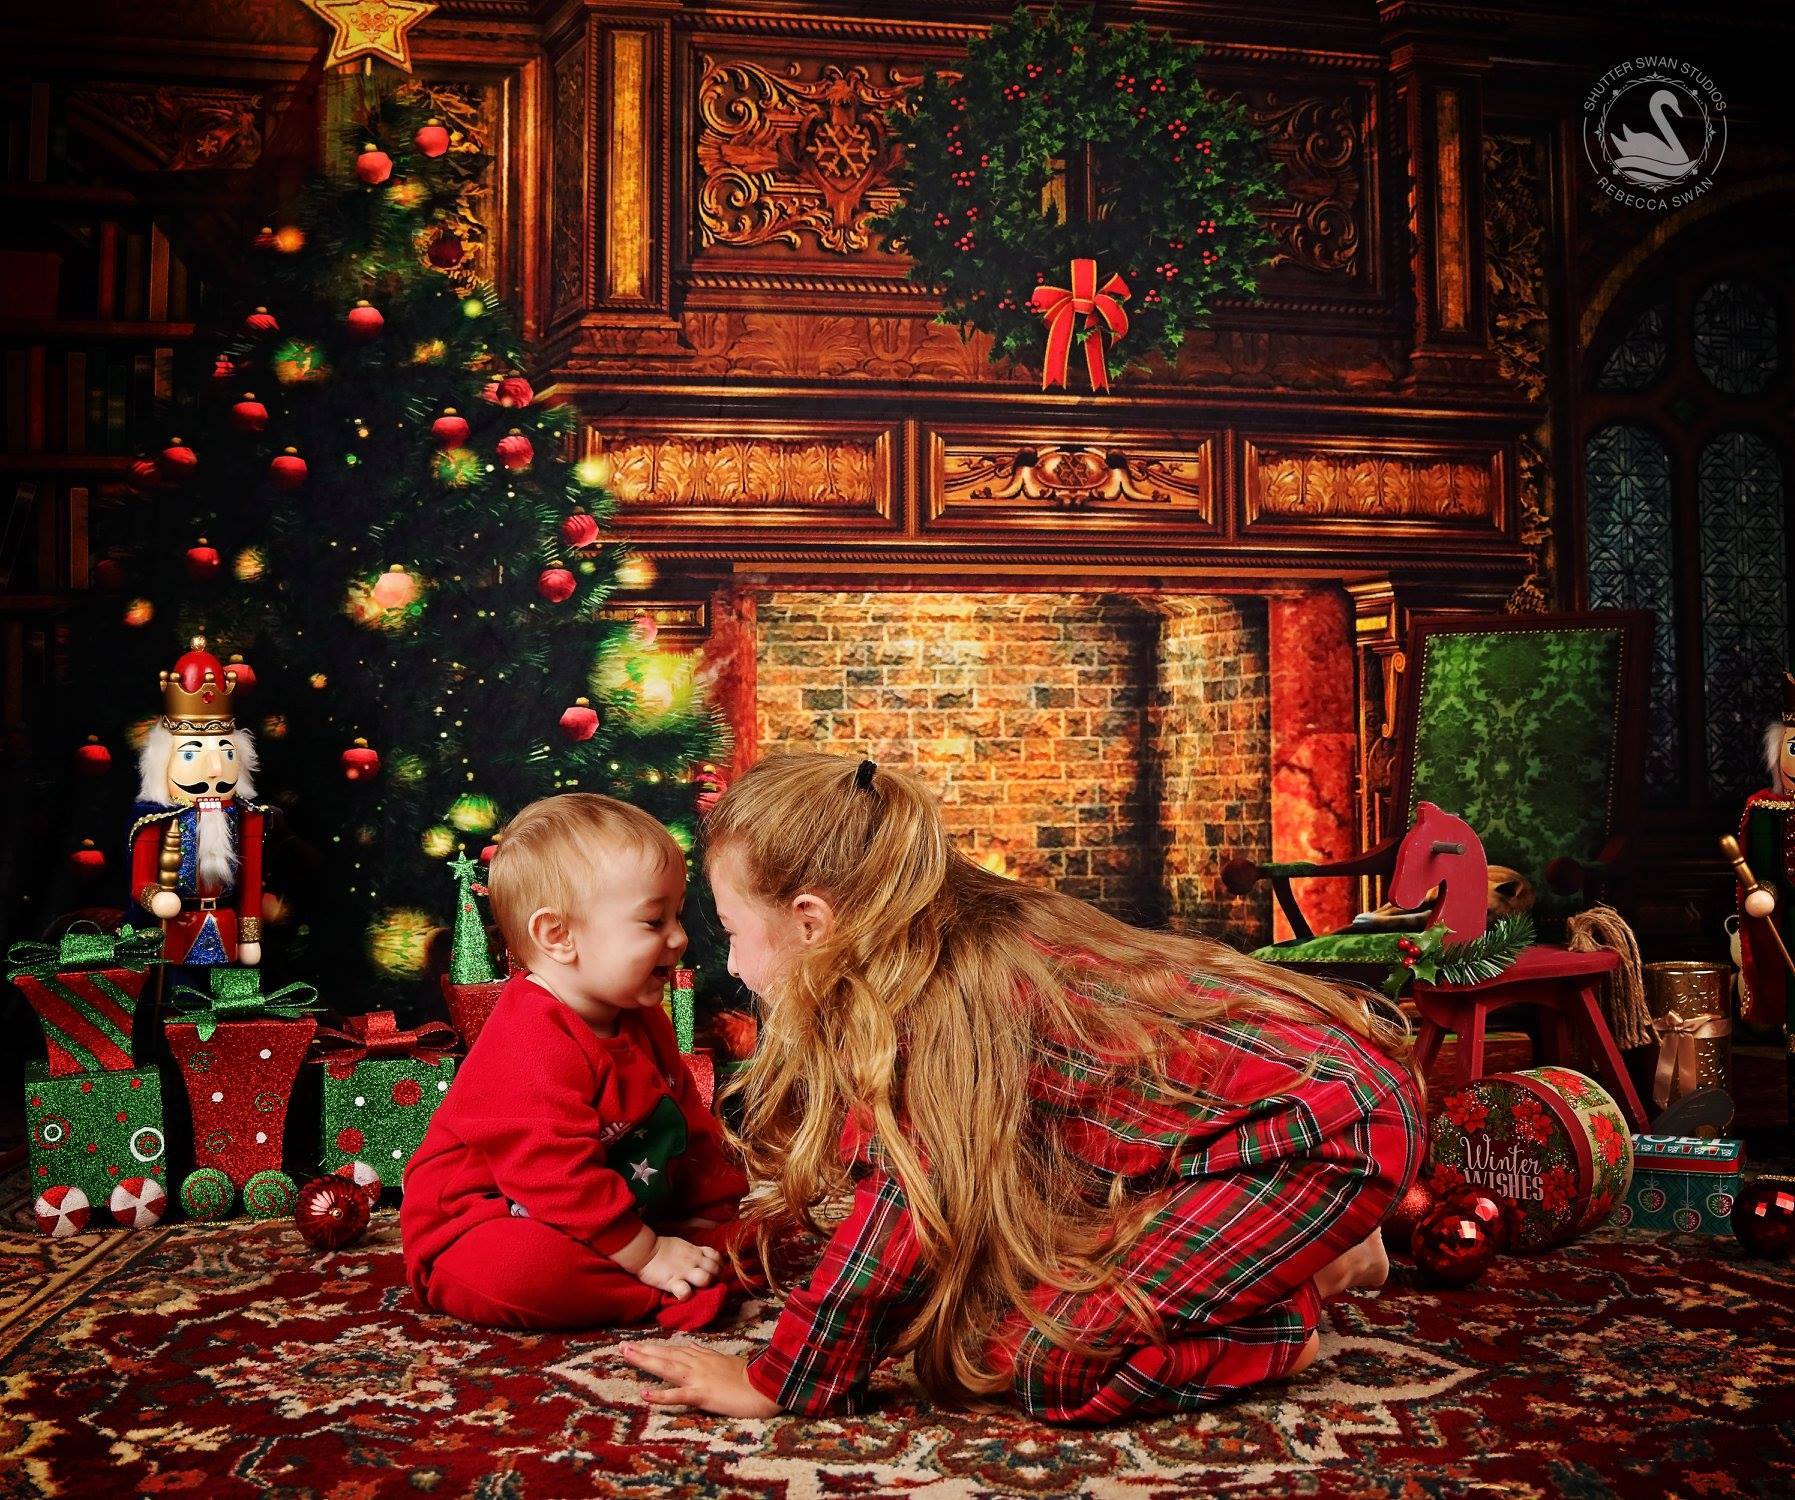 Katebackdrop鎷㈡綖Kate Christmas Tree And Fireplace Decorations for Photography